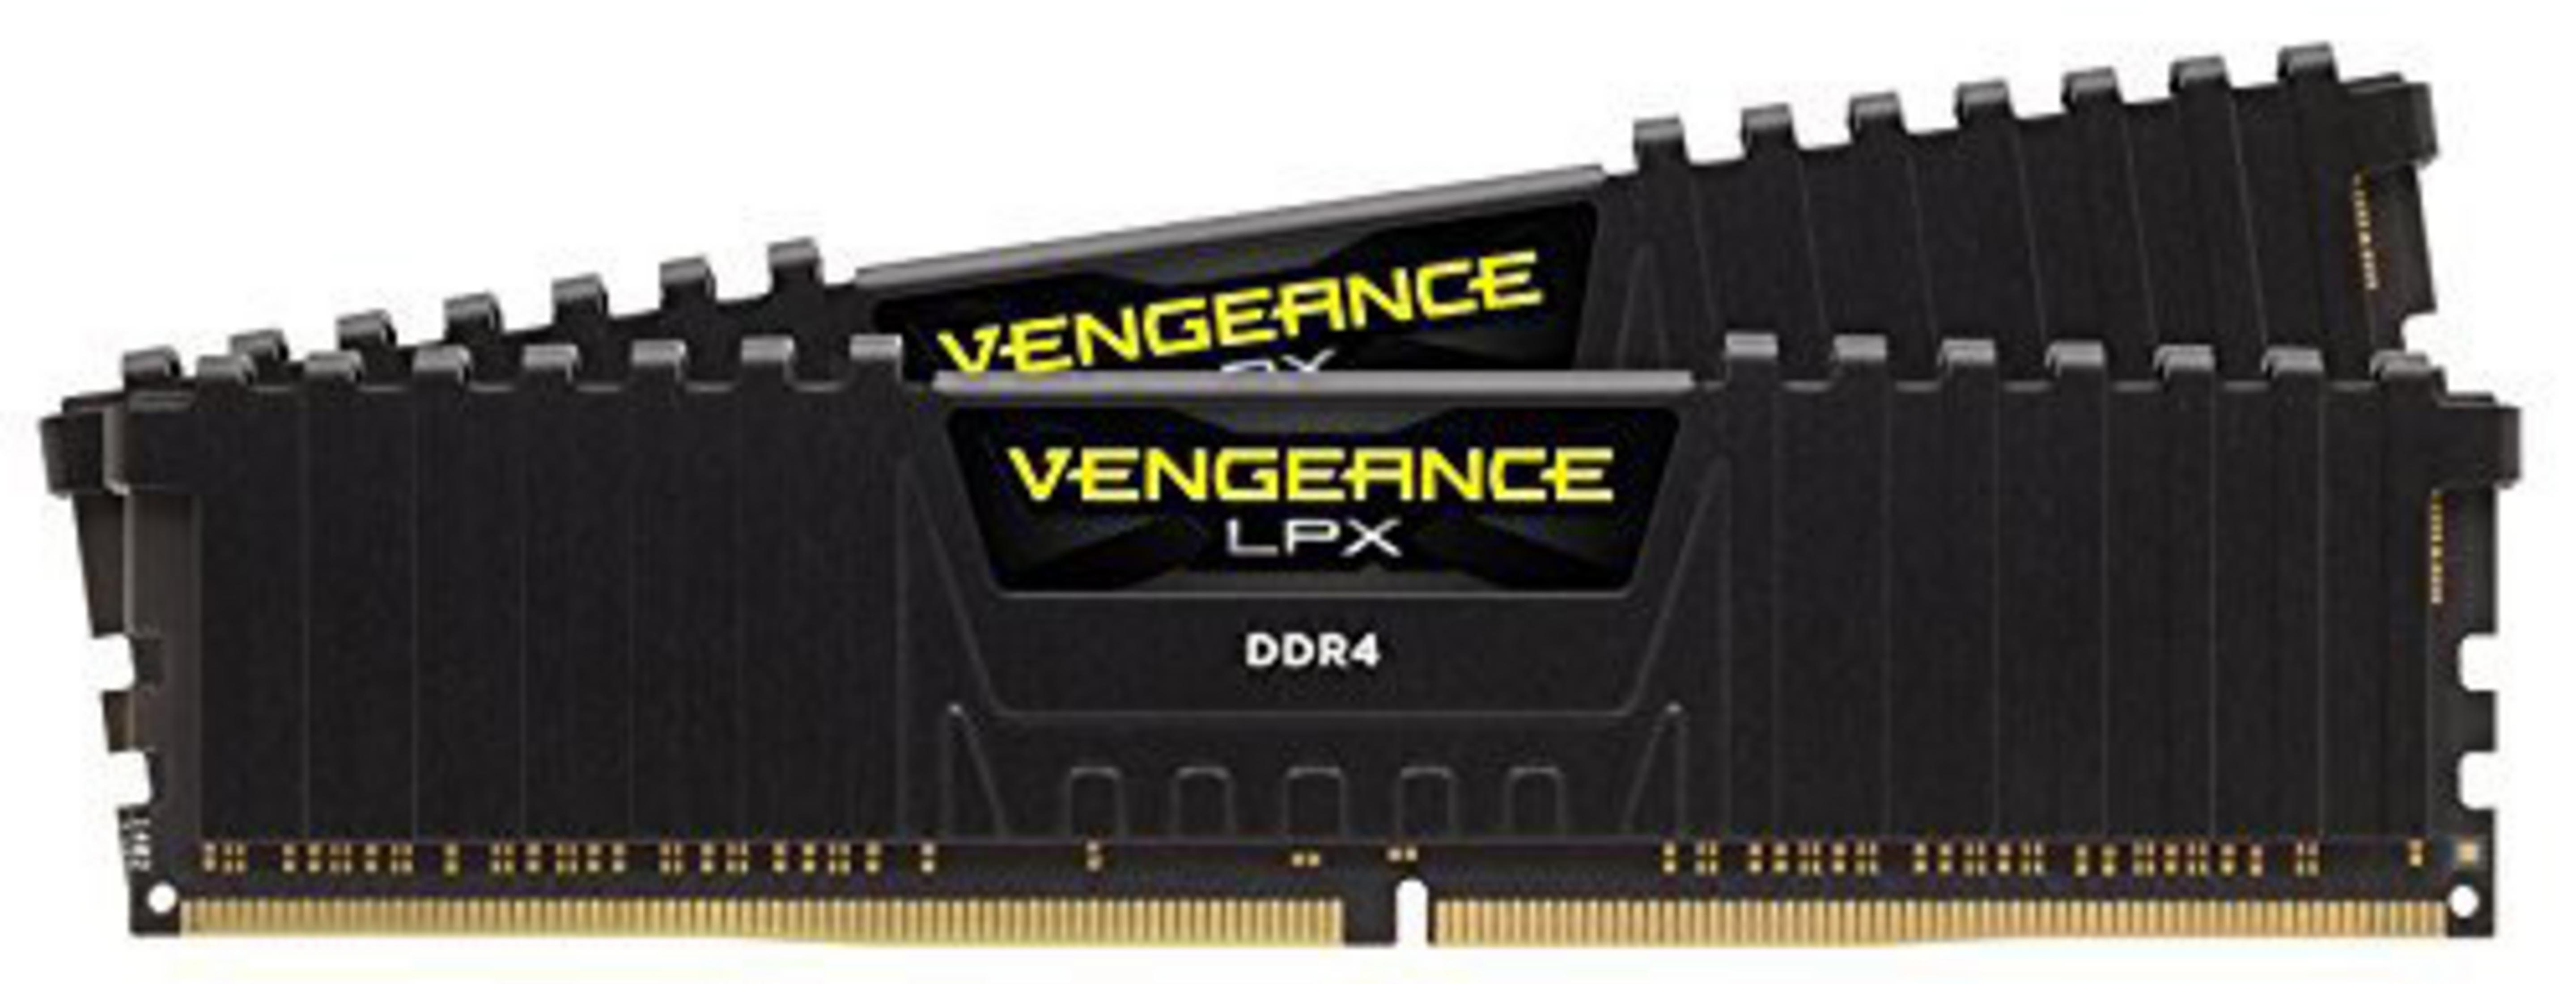 DDR4 DDR4 VENGEANCE LPX Arbeitsspeicher 2400MHZ GB CMK16GX4M2A2400C14 16GB CORSAIR 16